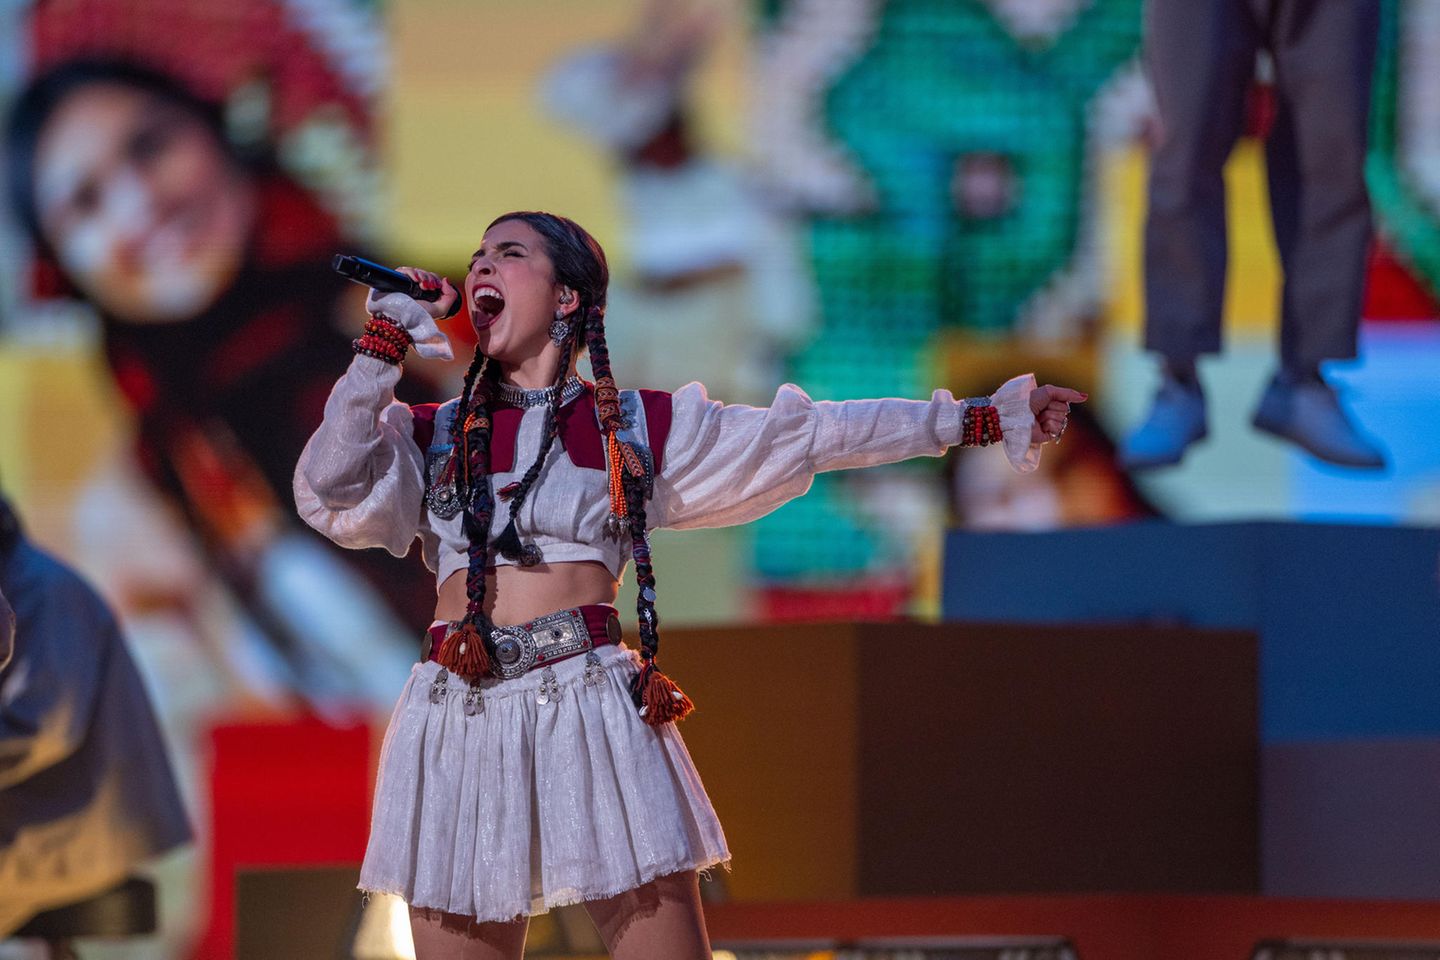 ESC Eurovision Song Contest Armenien: Ladaniva – "Jako"